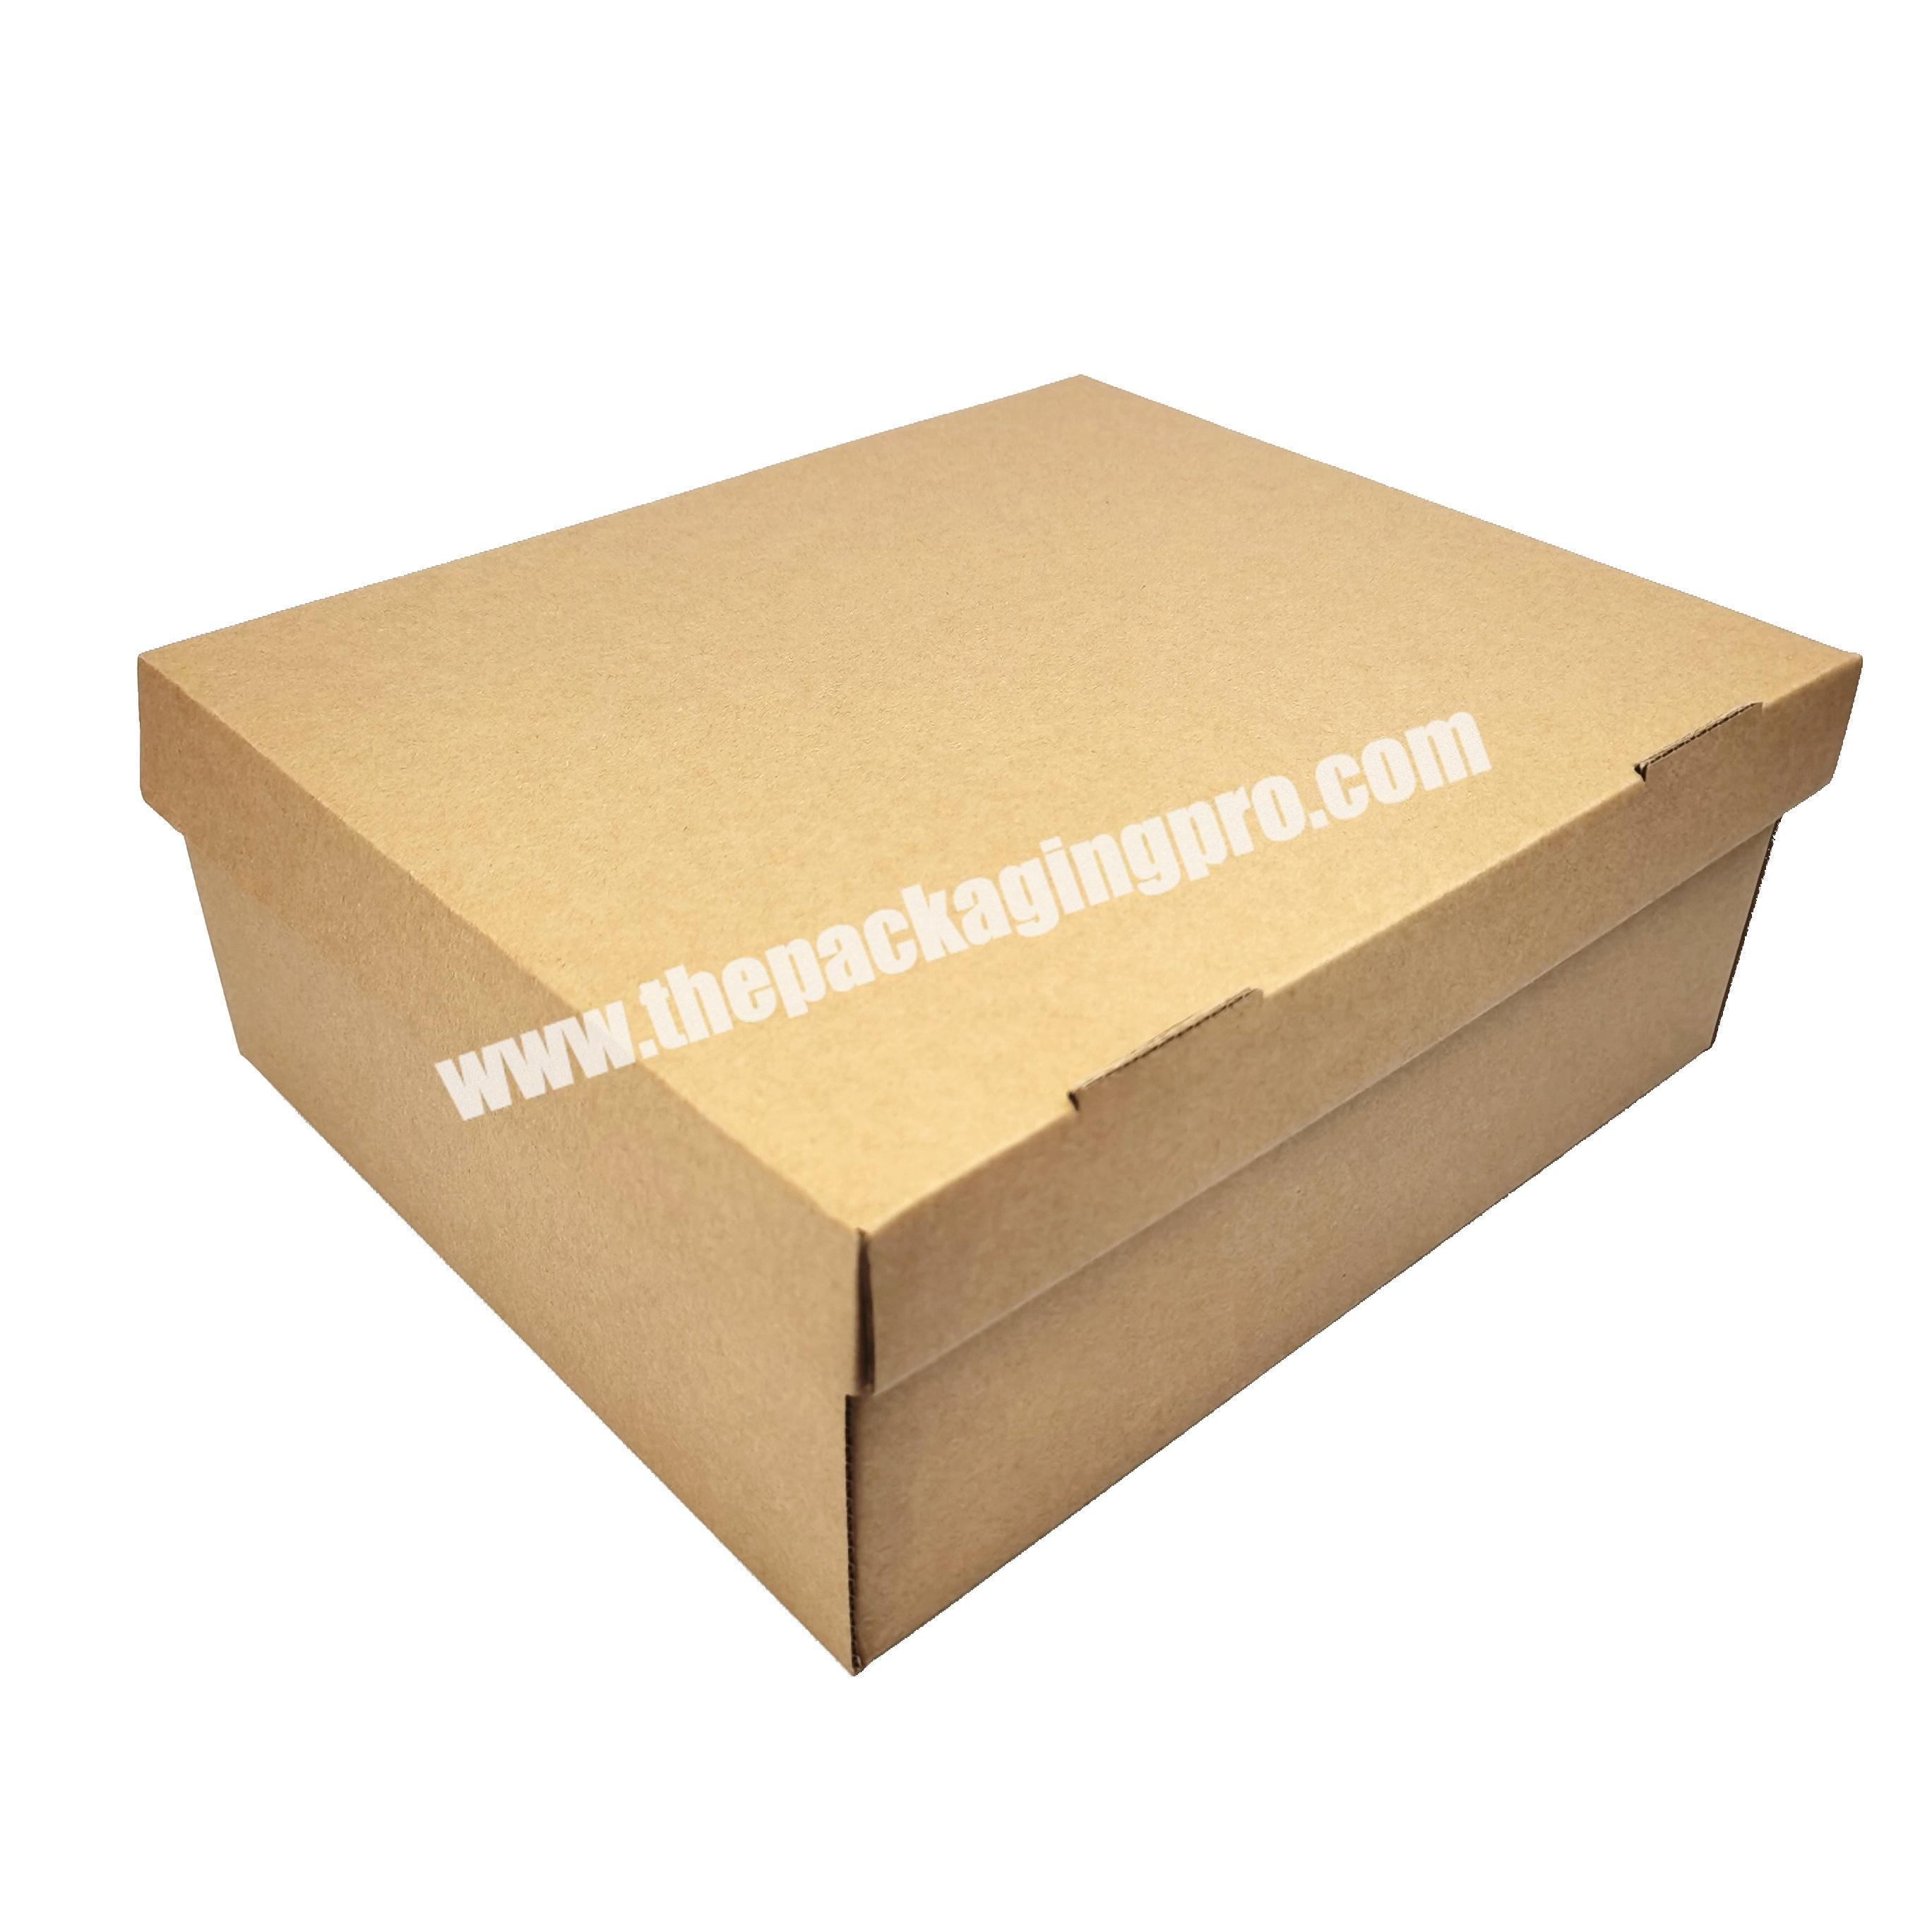 Wholesale custom printed unique corrugated shipping shoe boxes